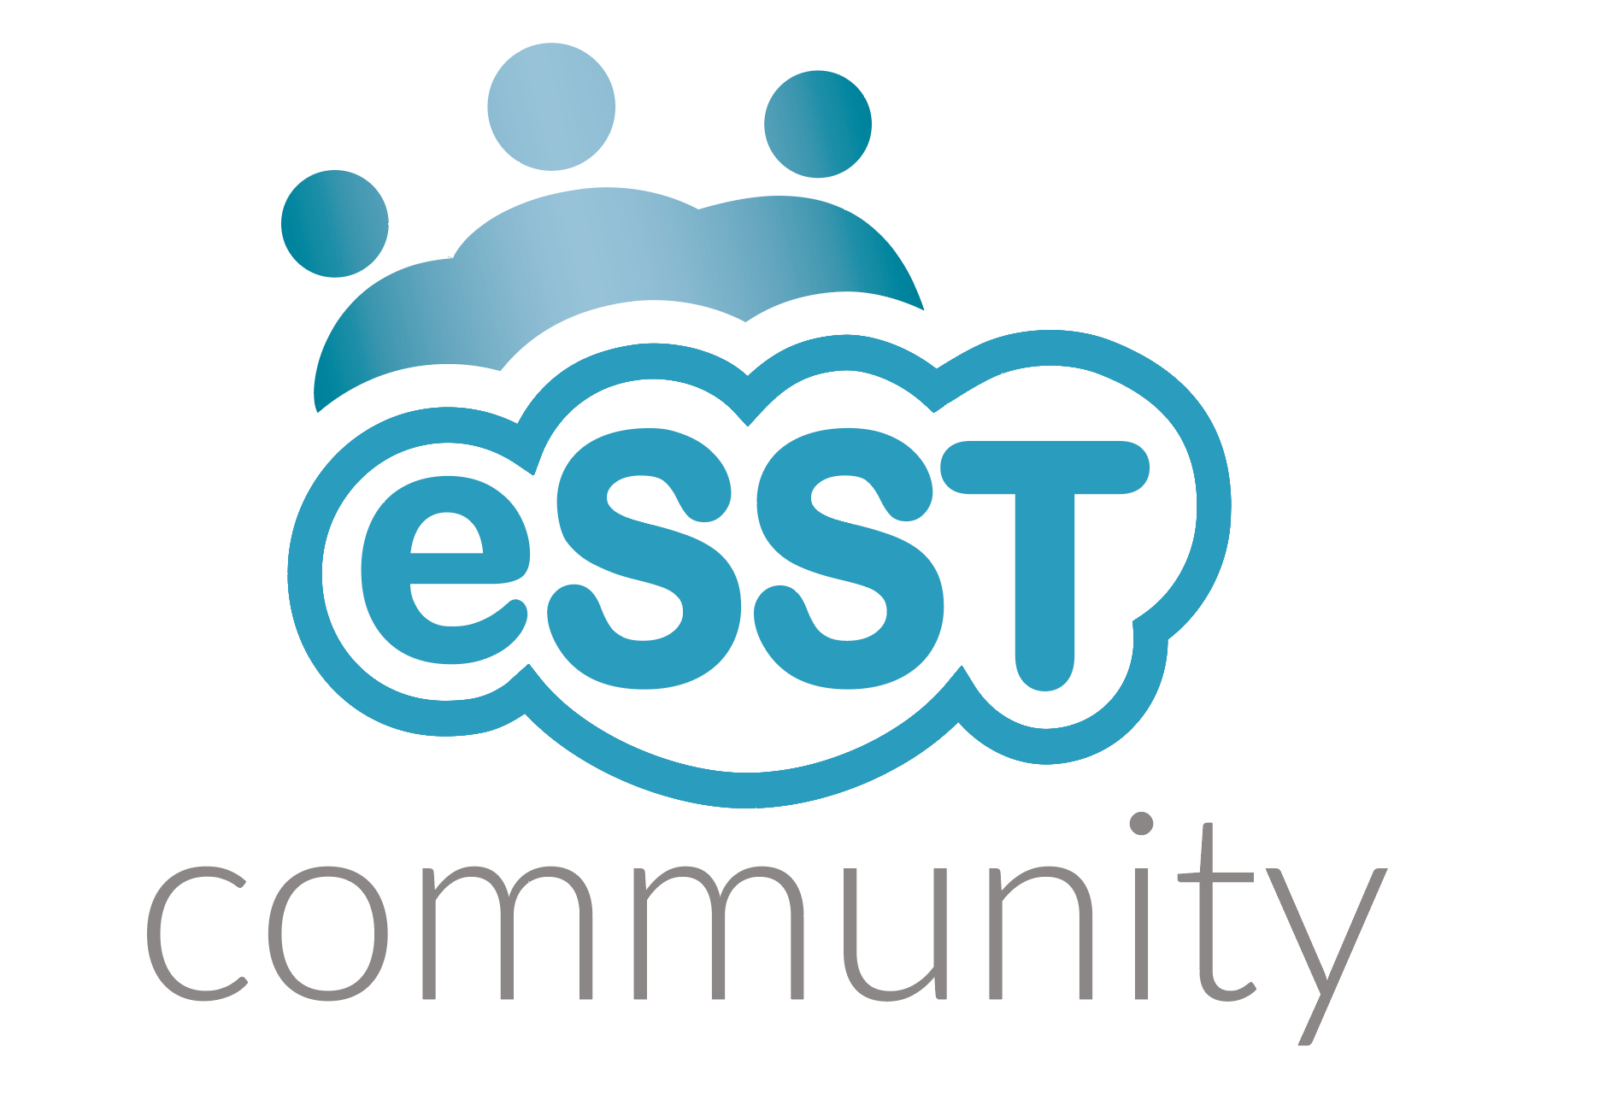 Salon eSST community